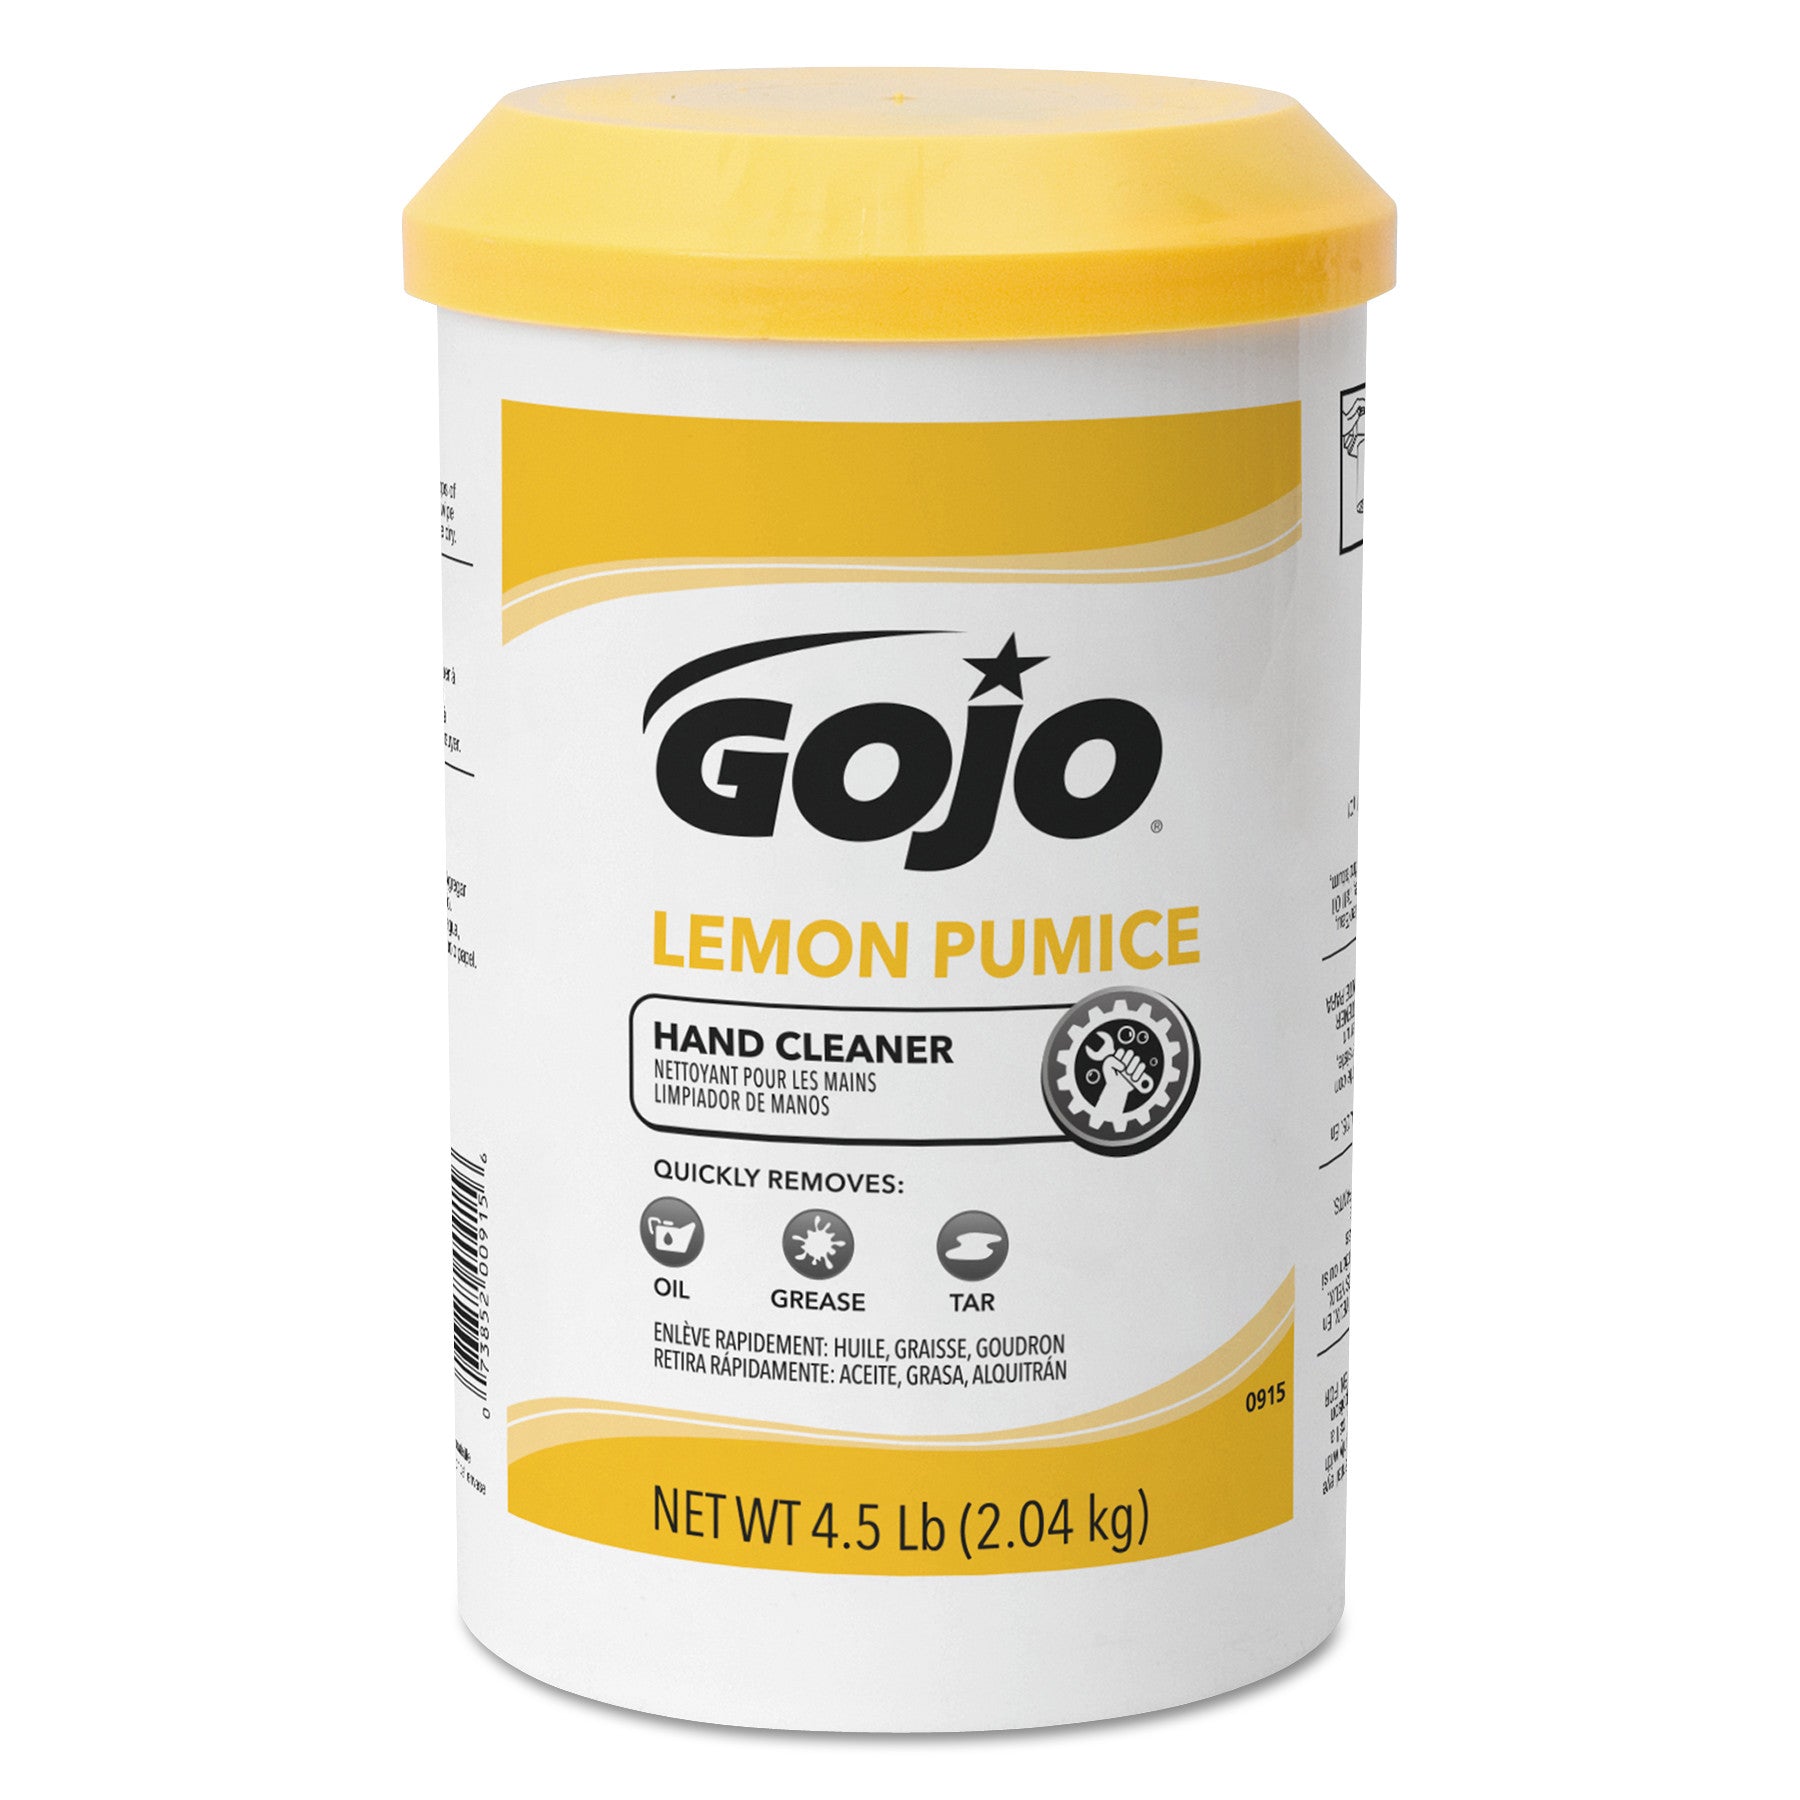 pumice-hand-cleaner-lemon-scent-45-lb-tub-6-carton_goj0915 - 1